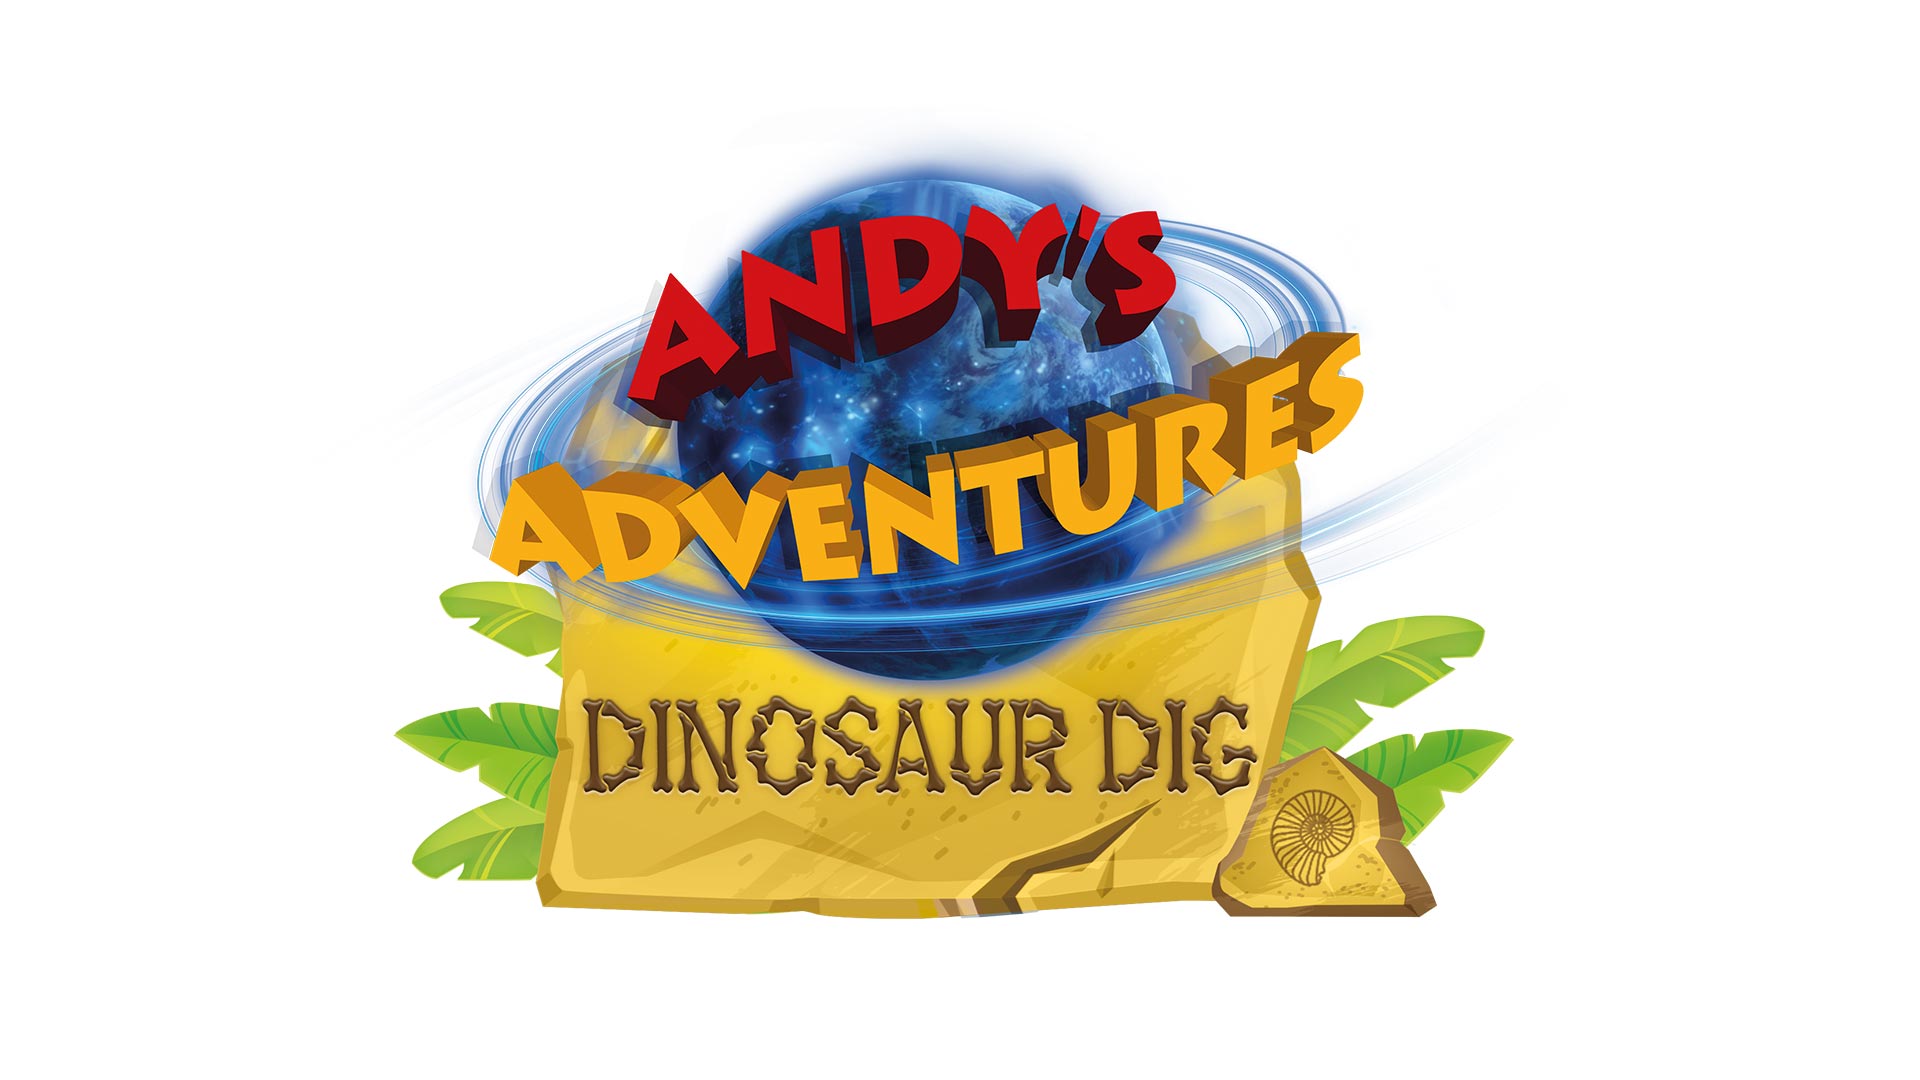 Andy’s Adventures Dinosaur Dig